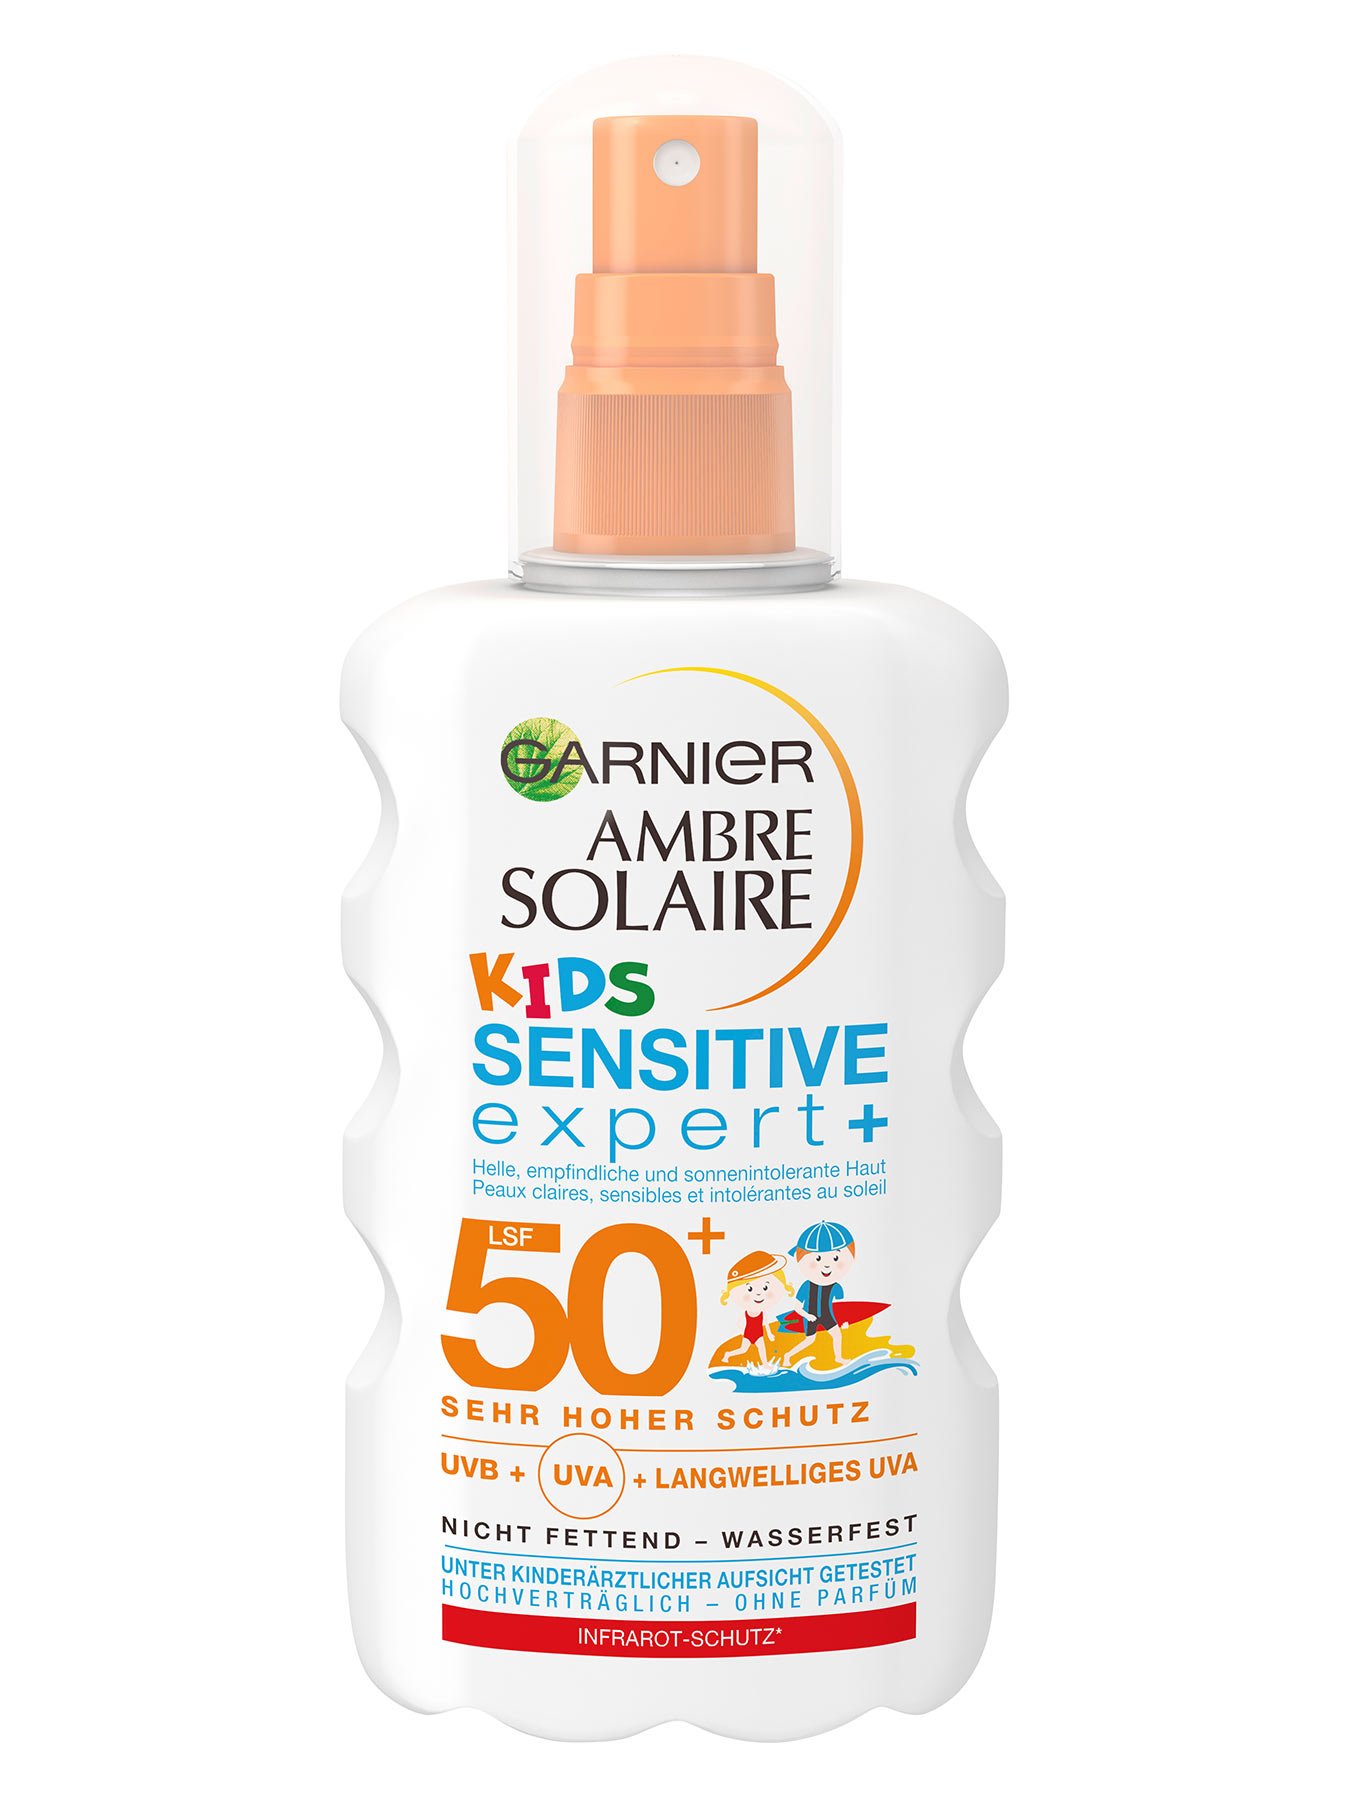 Kids Sensitive expert+ Spray FPS Garnier 50+ 